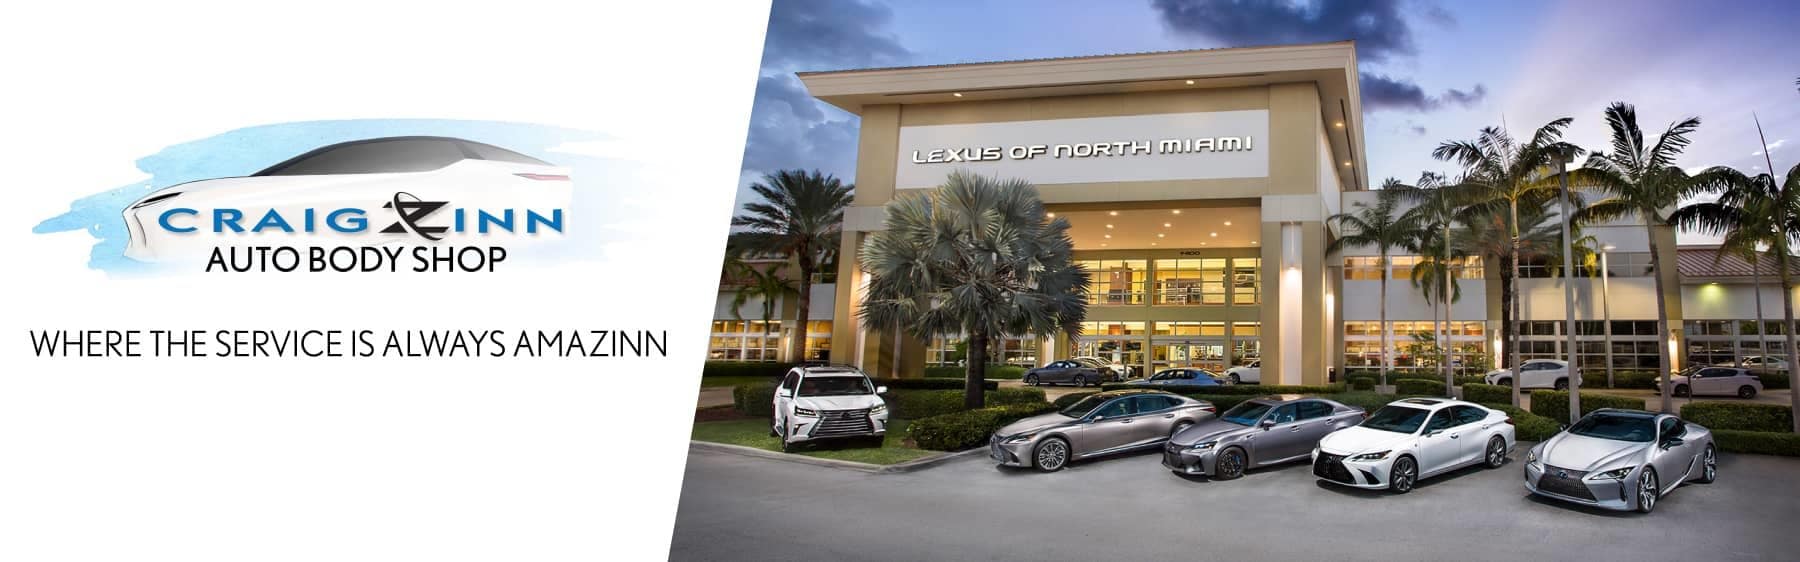 Craig Zinn Auto Shop and Lexus of North Miami logos